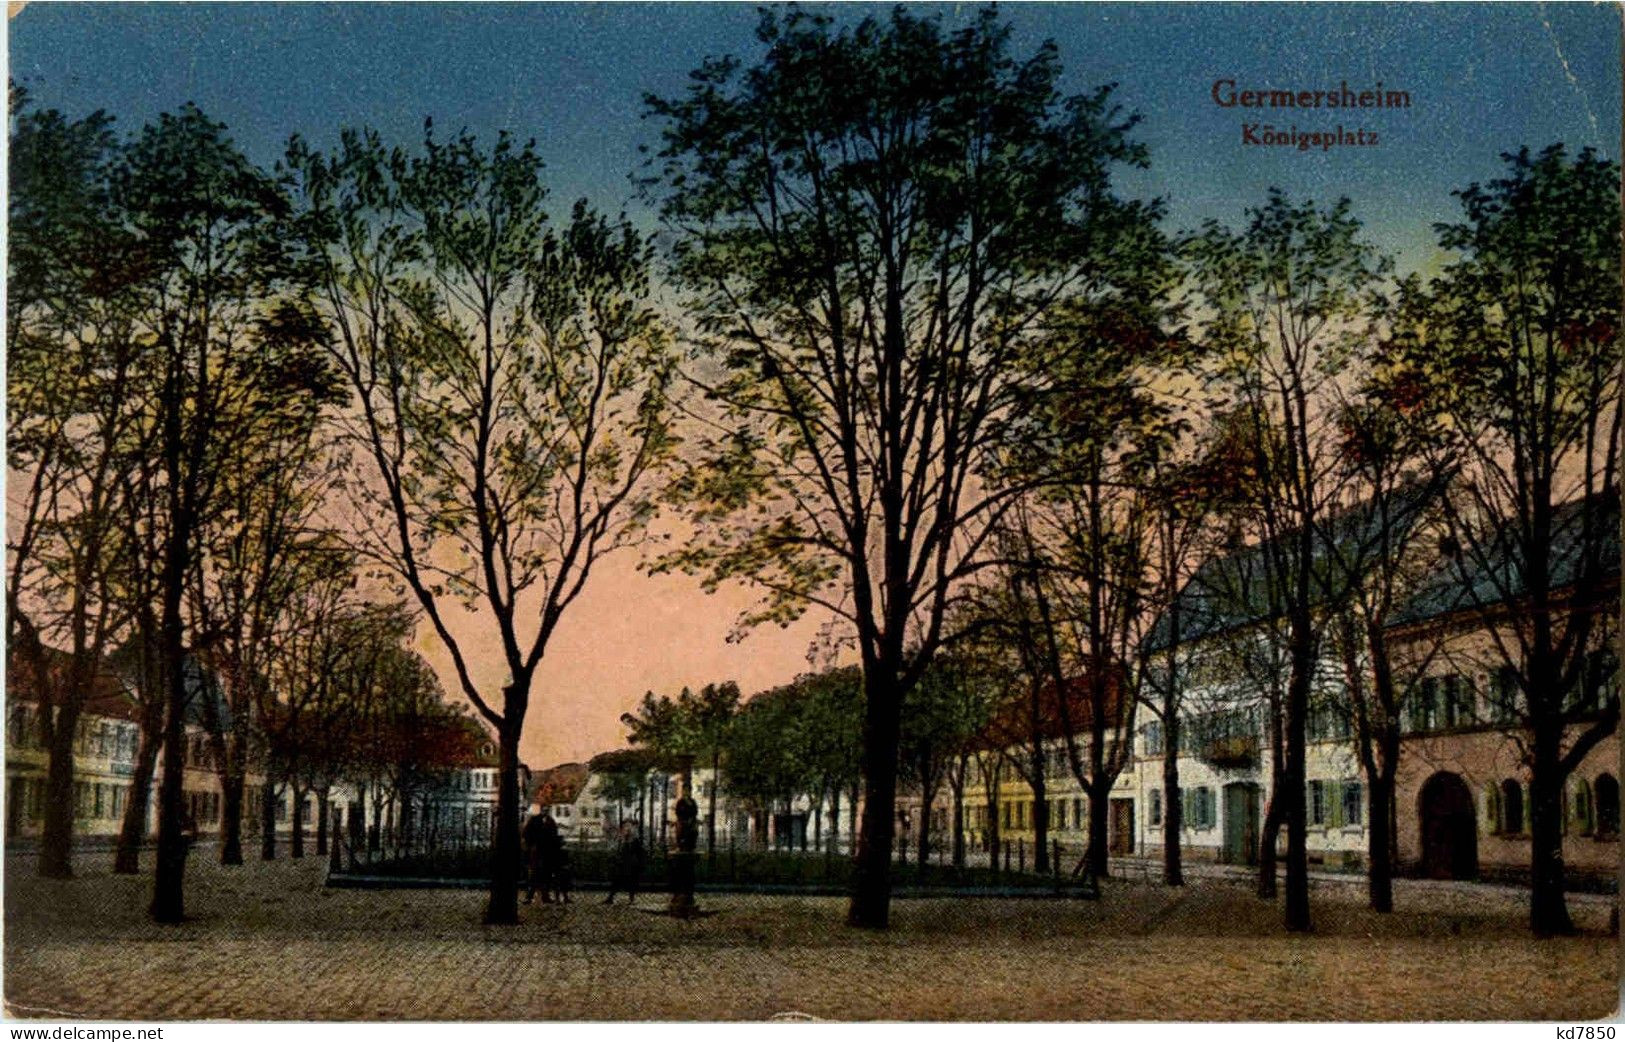 Germersheim - Königsplatz - Germersheim